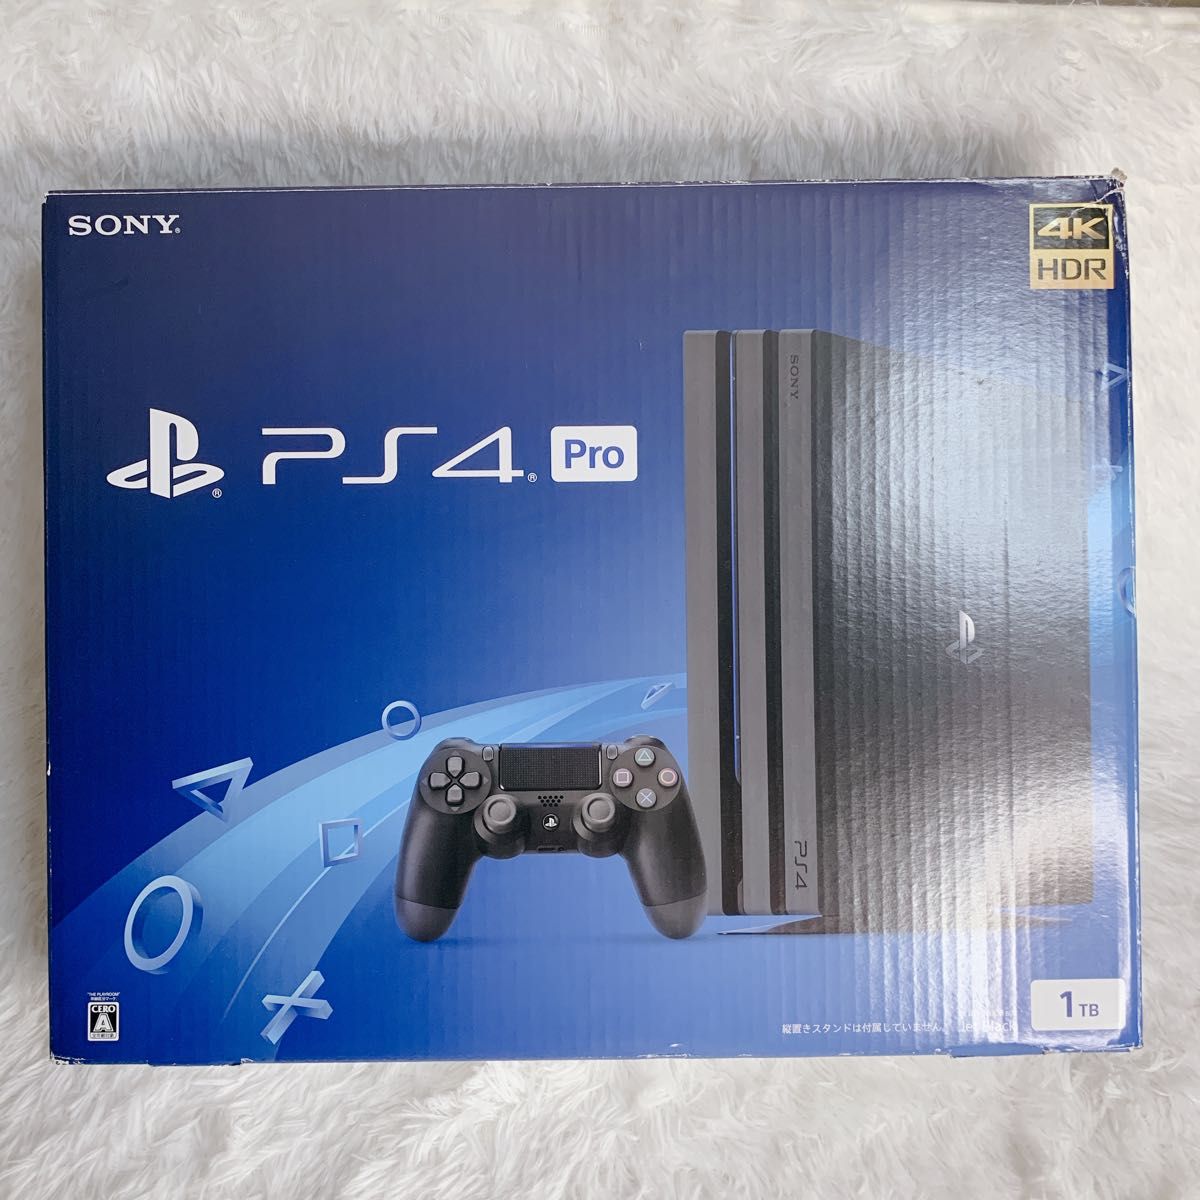 sonyプレイステーション4 pro cuh-7100b ジェットブラック PlayStation4